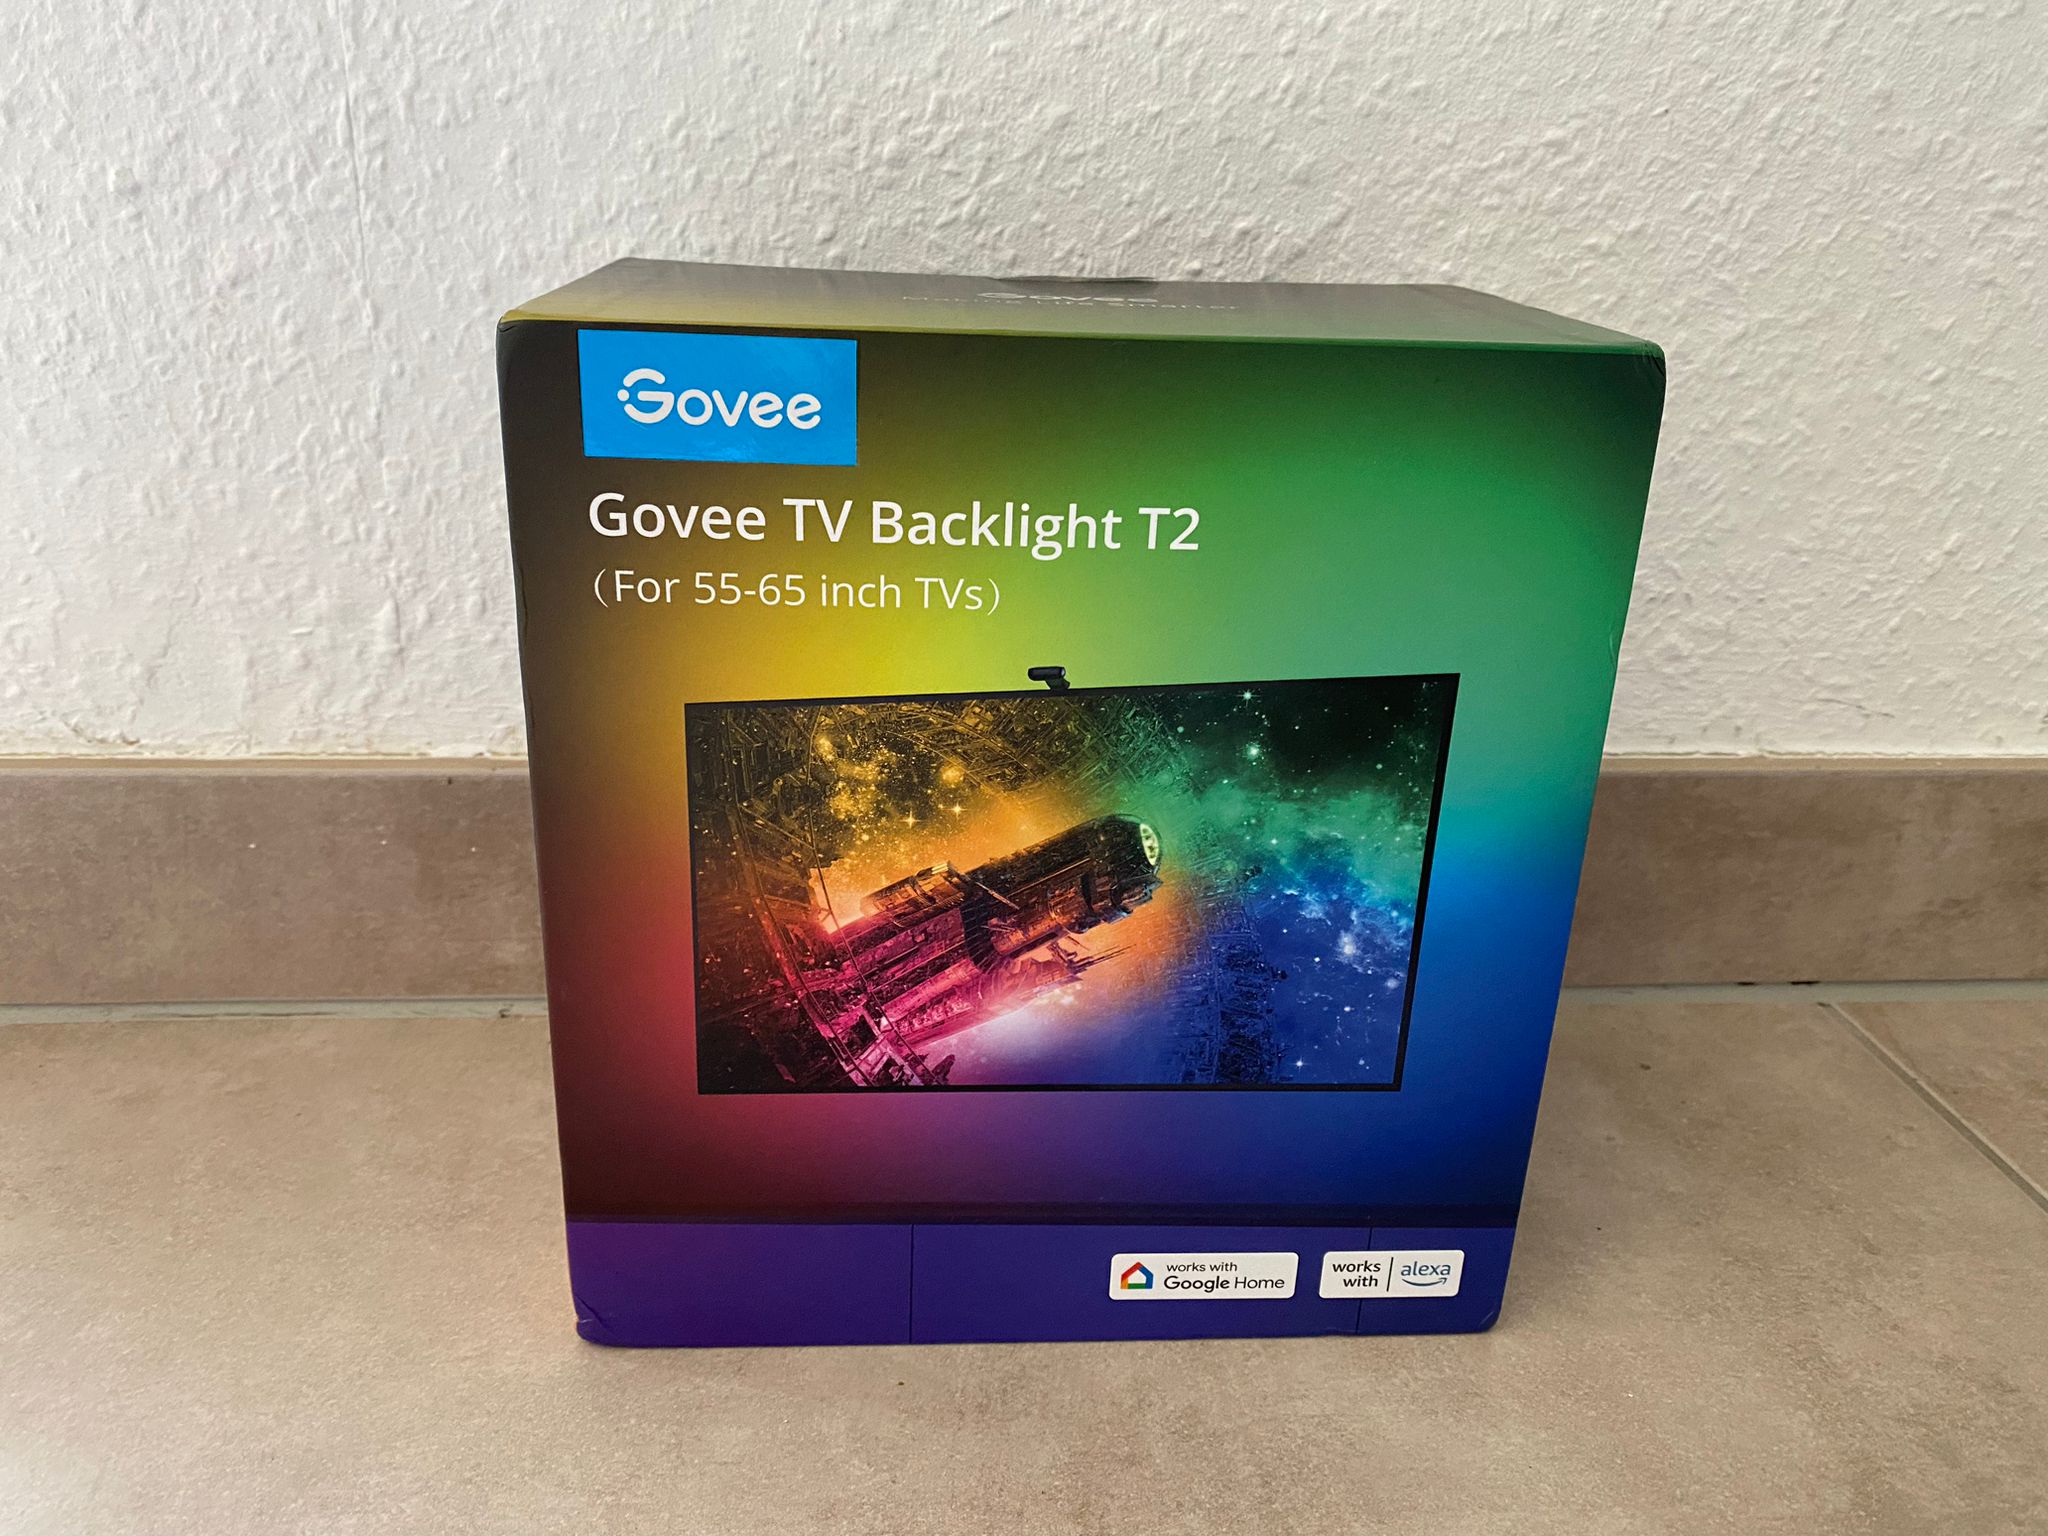 Govee TV Backlight T2 und Gaming G1 Ambilight unter der Lupe